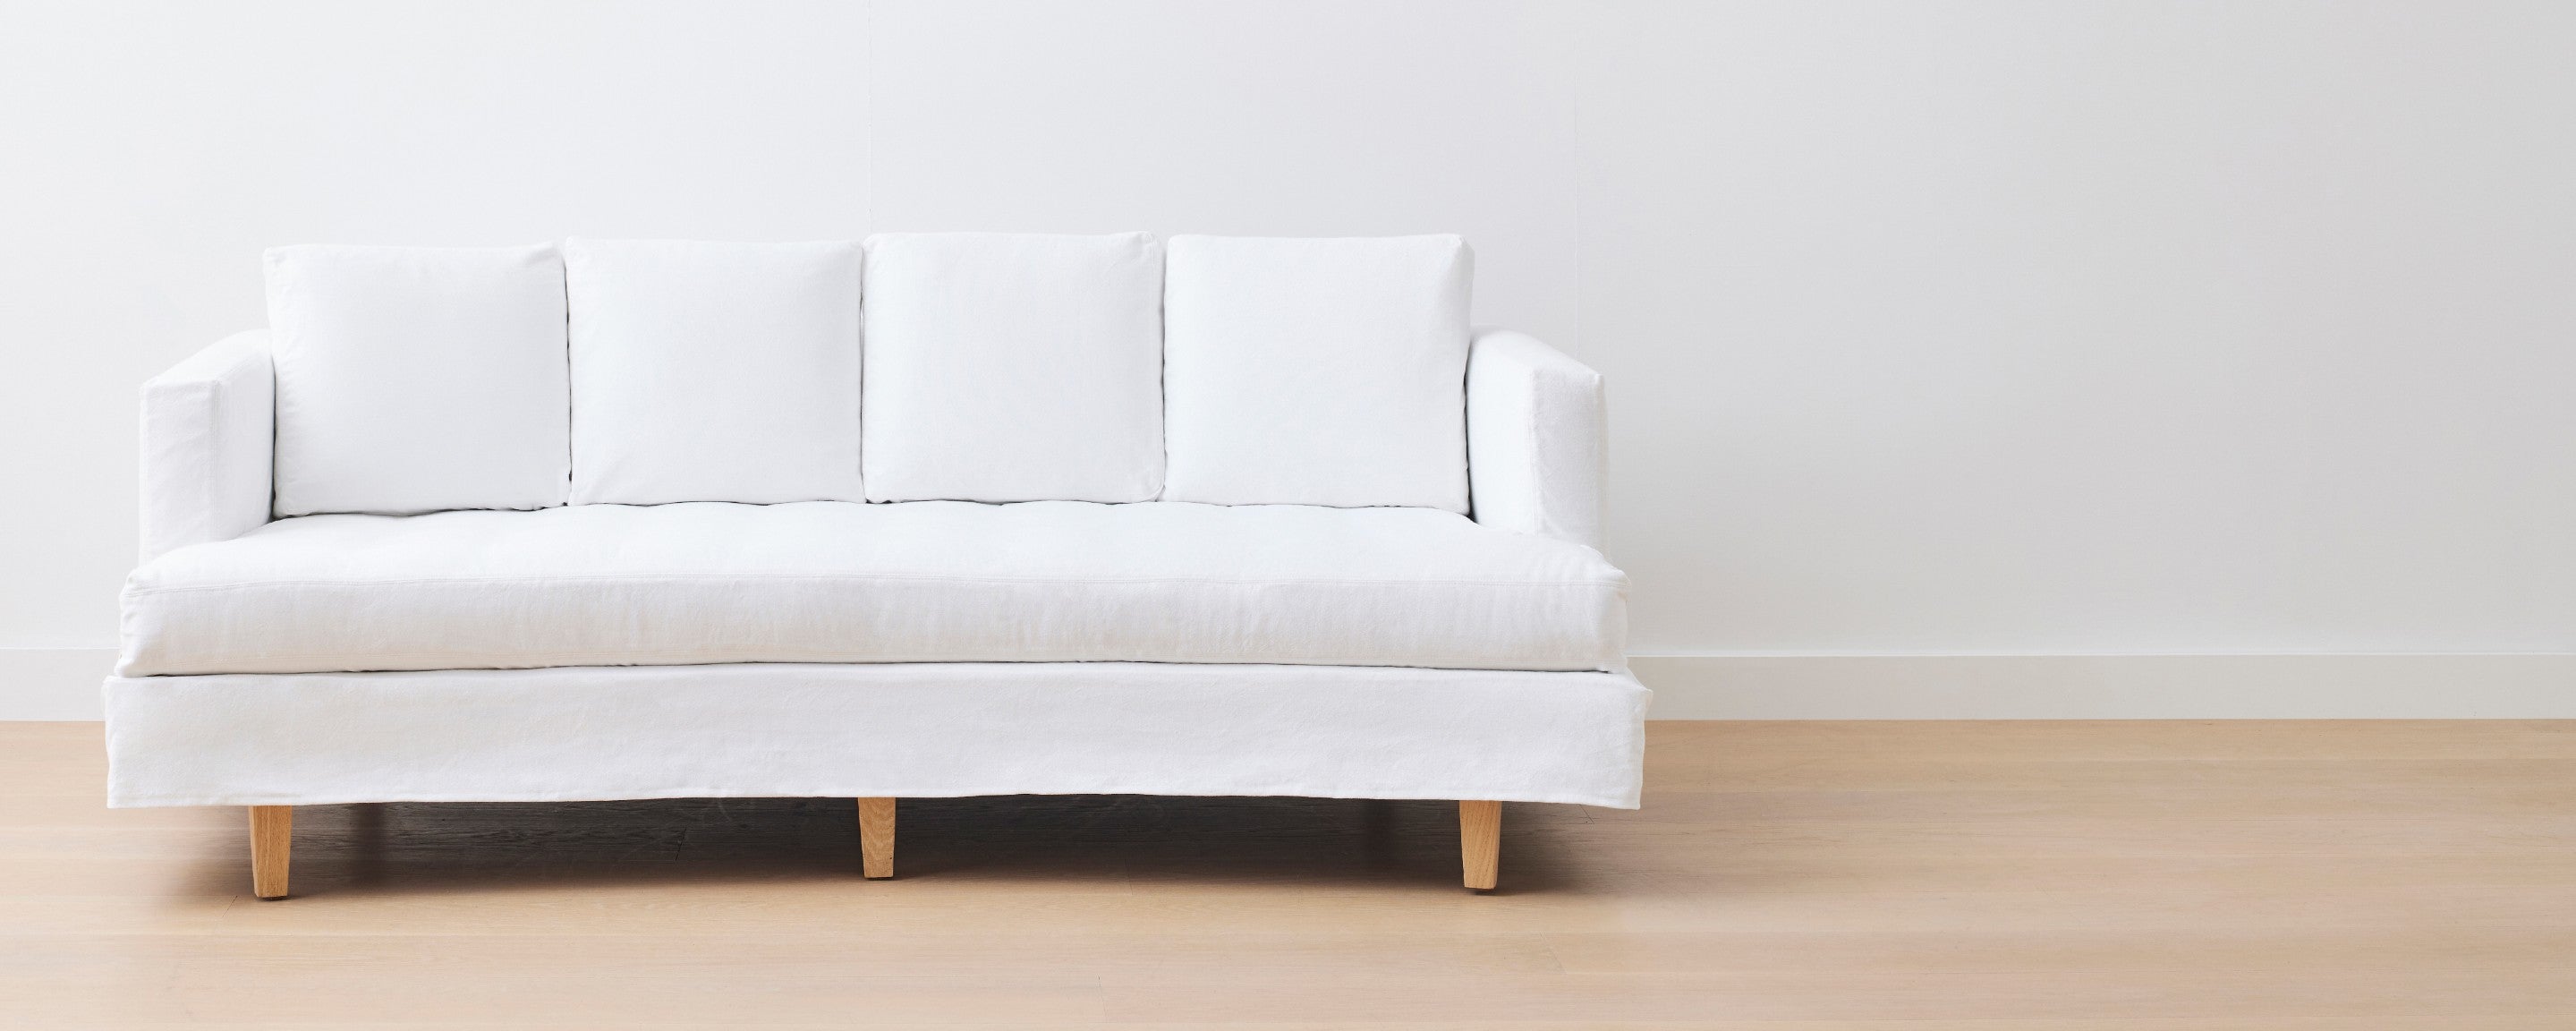 the homenature malibu sofa